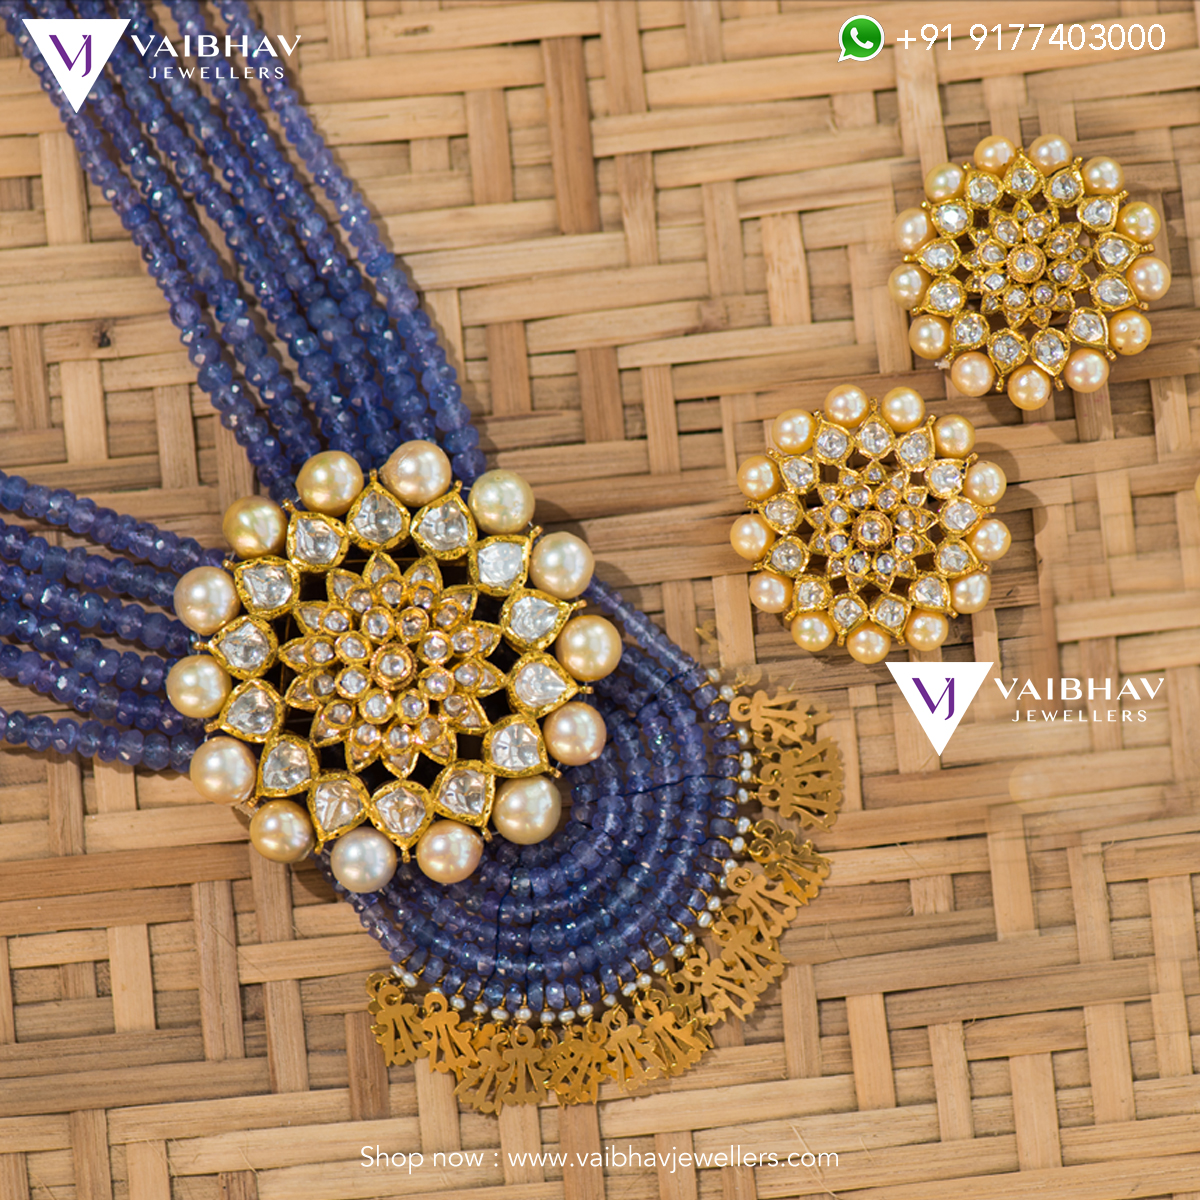 BSA Beads And Kundan Locket Set From Vibhav Jewellers